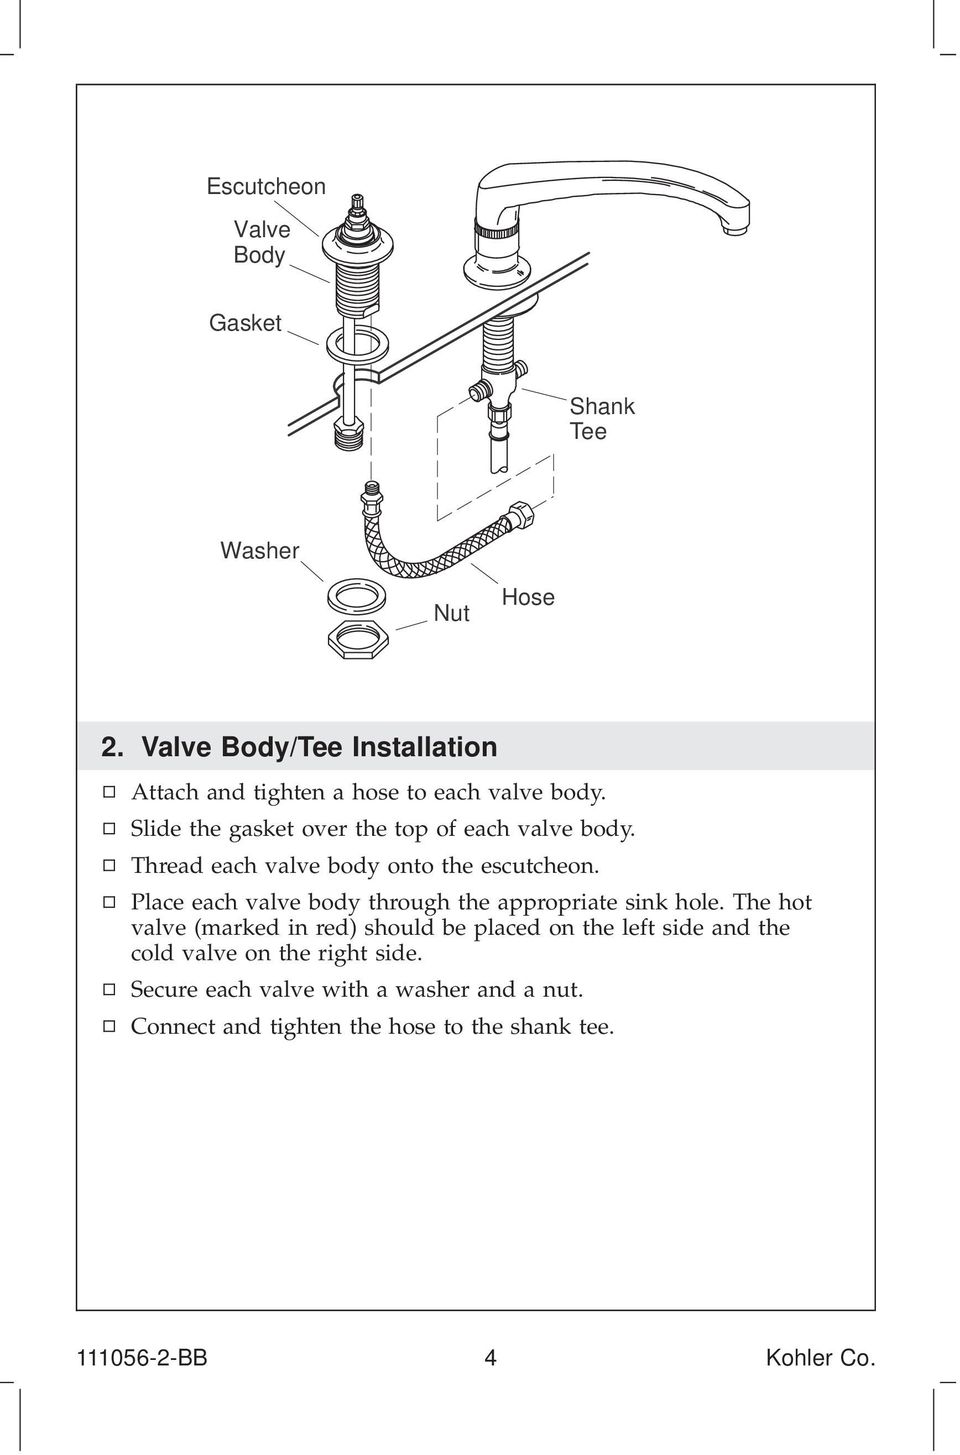 Thread each valve body onto the escutcheon. Place each valve body through the appropriate sink hole.